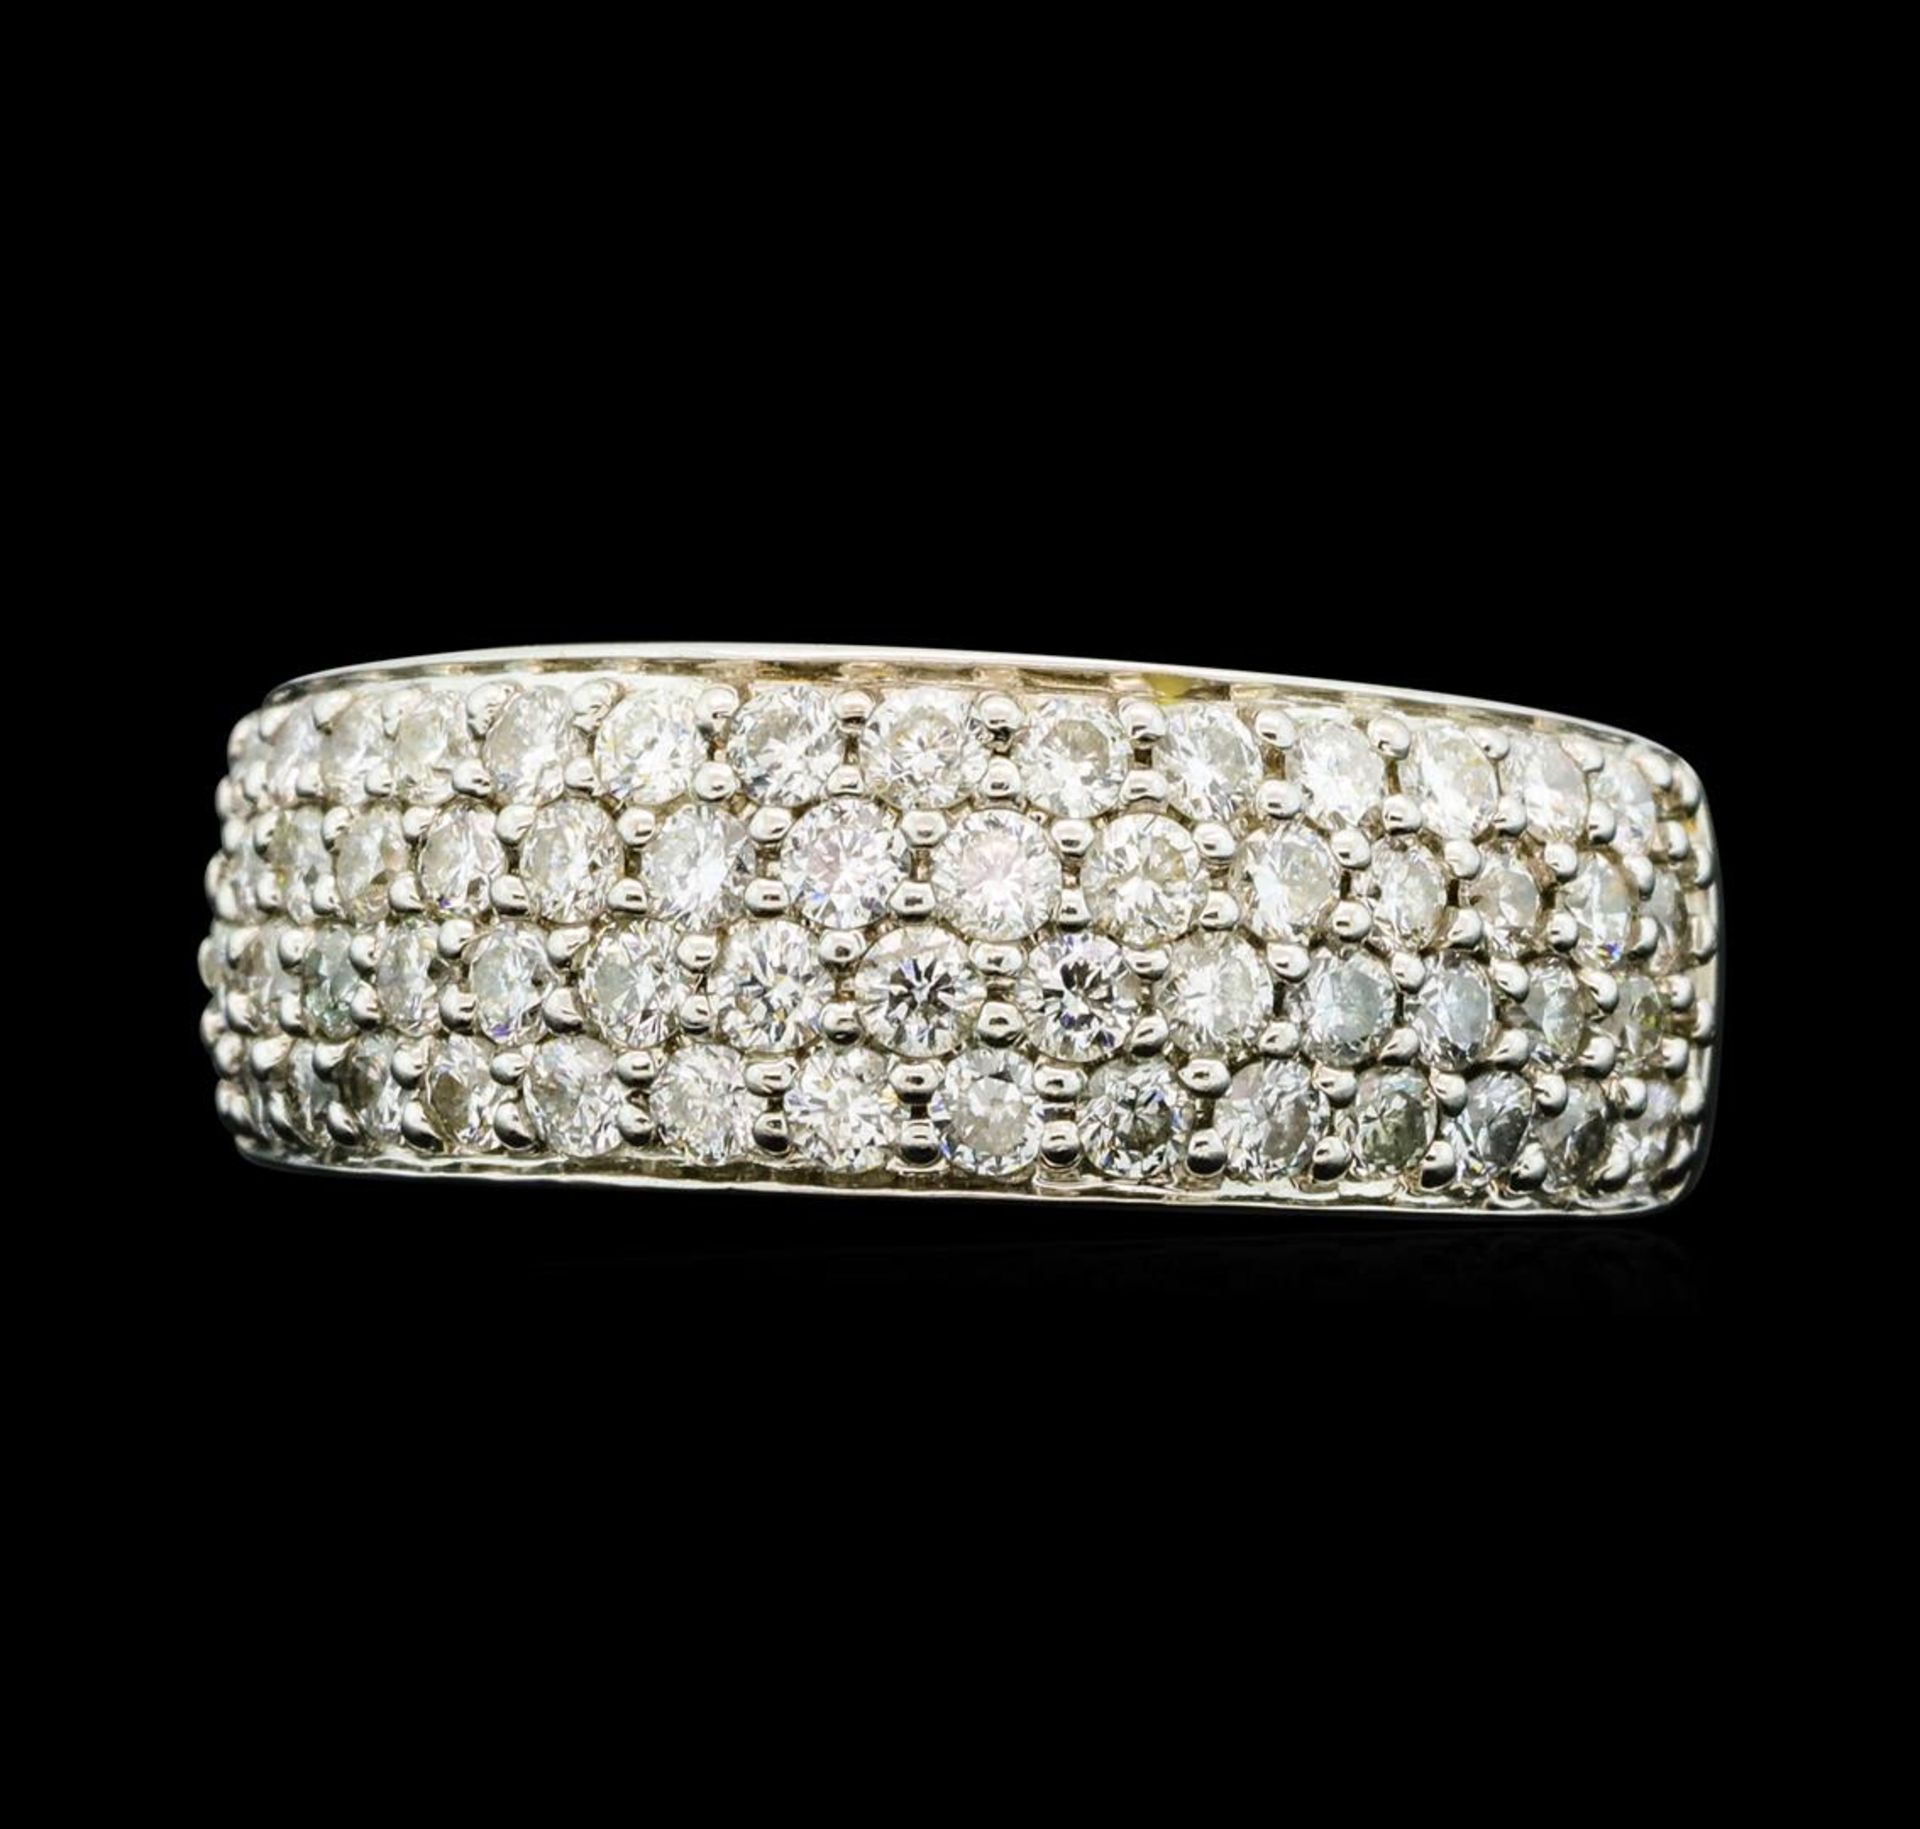 1.00 ctw Diamond Ring - 14KT White Gold - Image 2 of 4